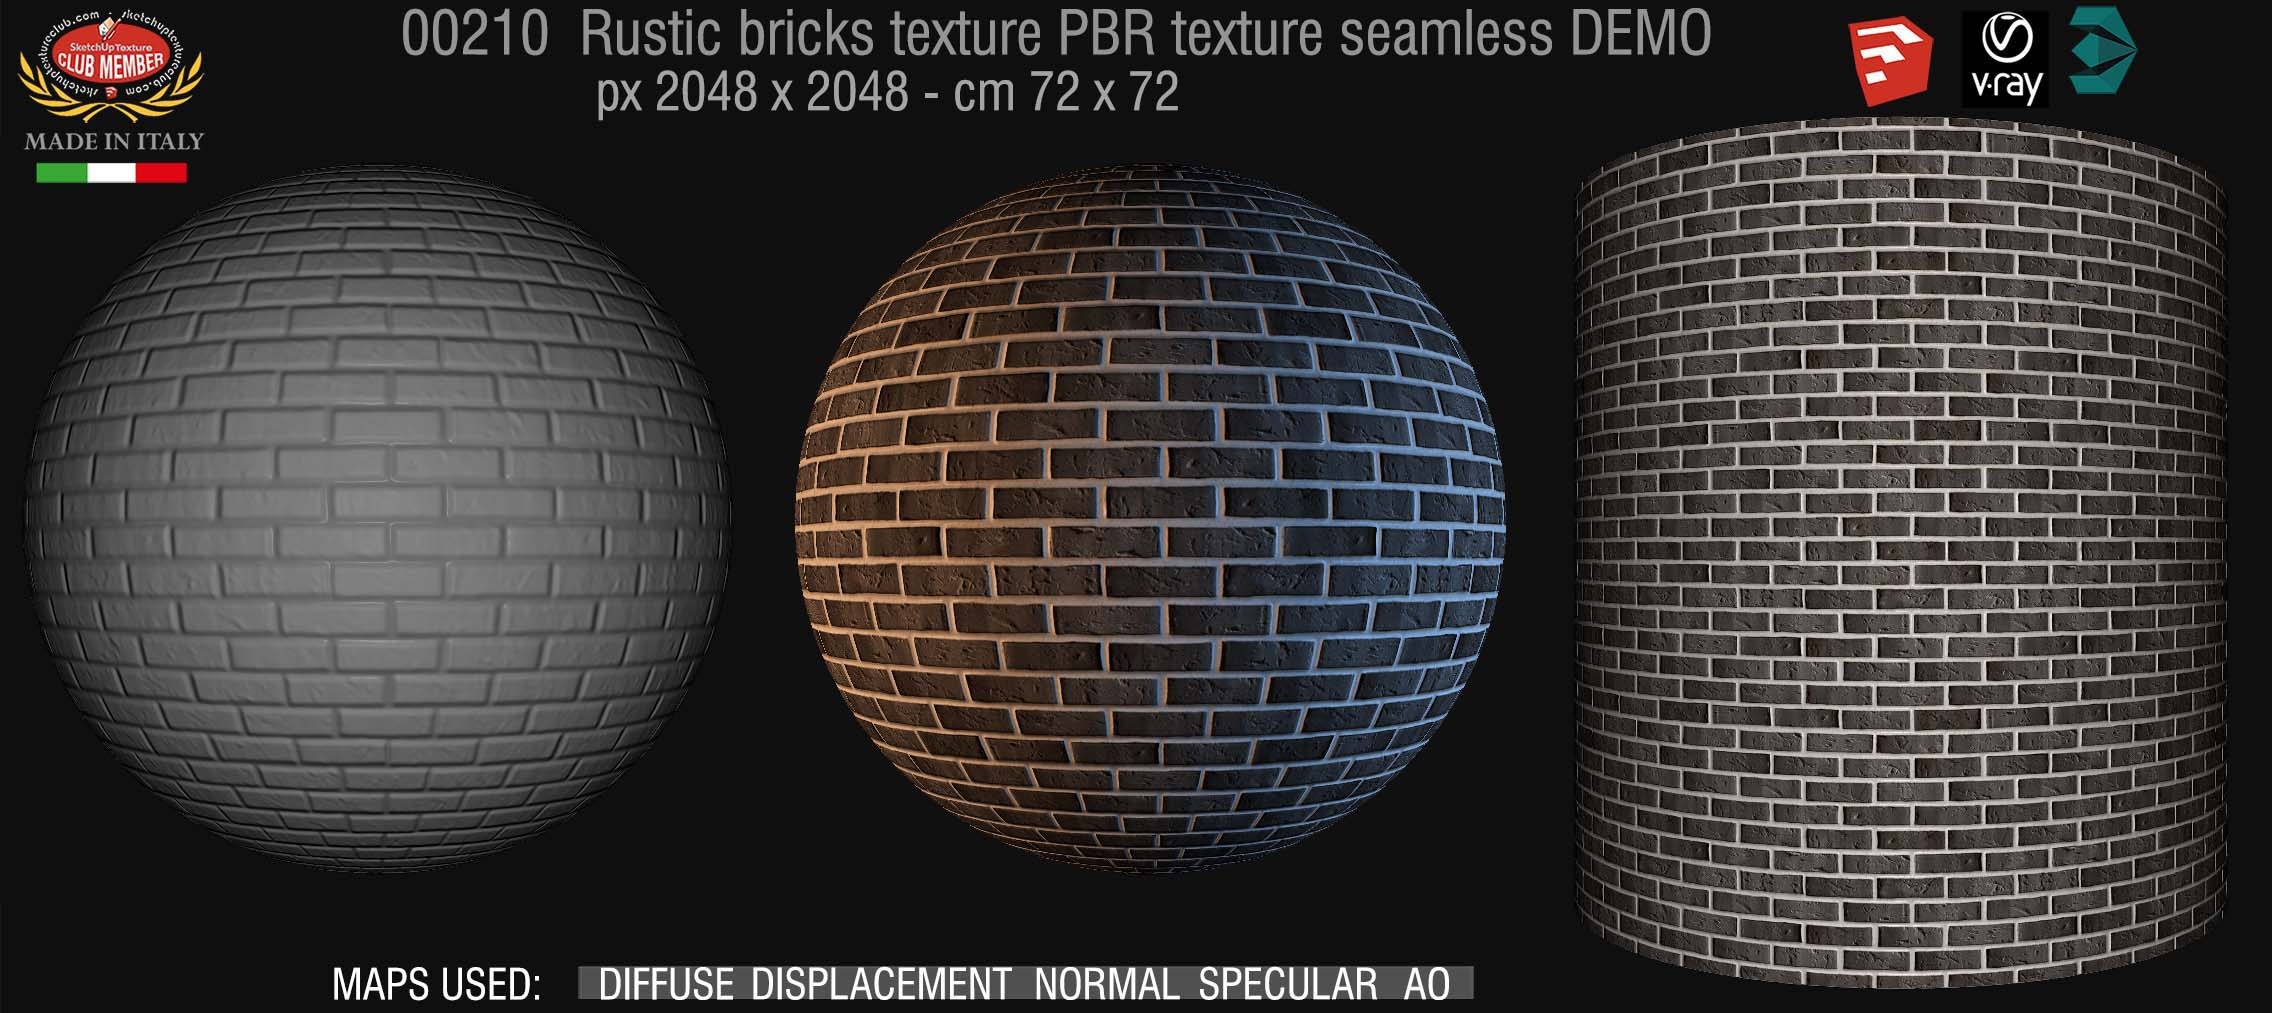 00210 rustic bricks PBR texture seamless DEMO